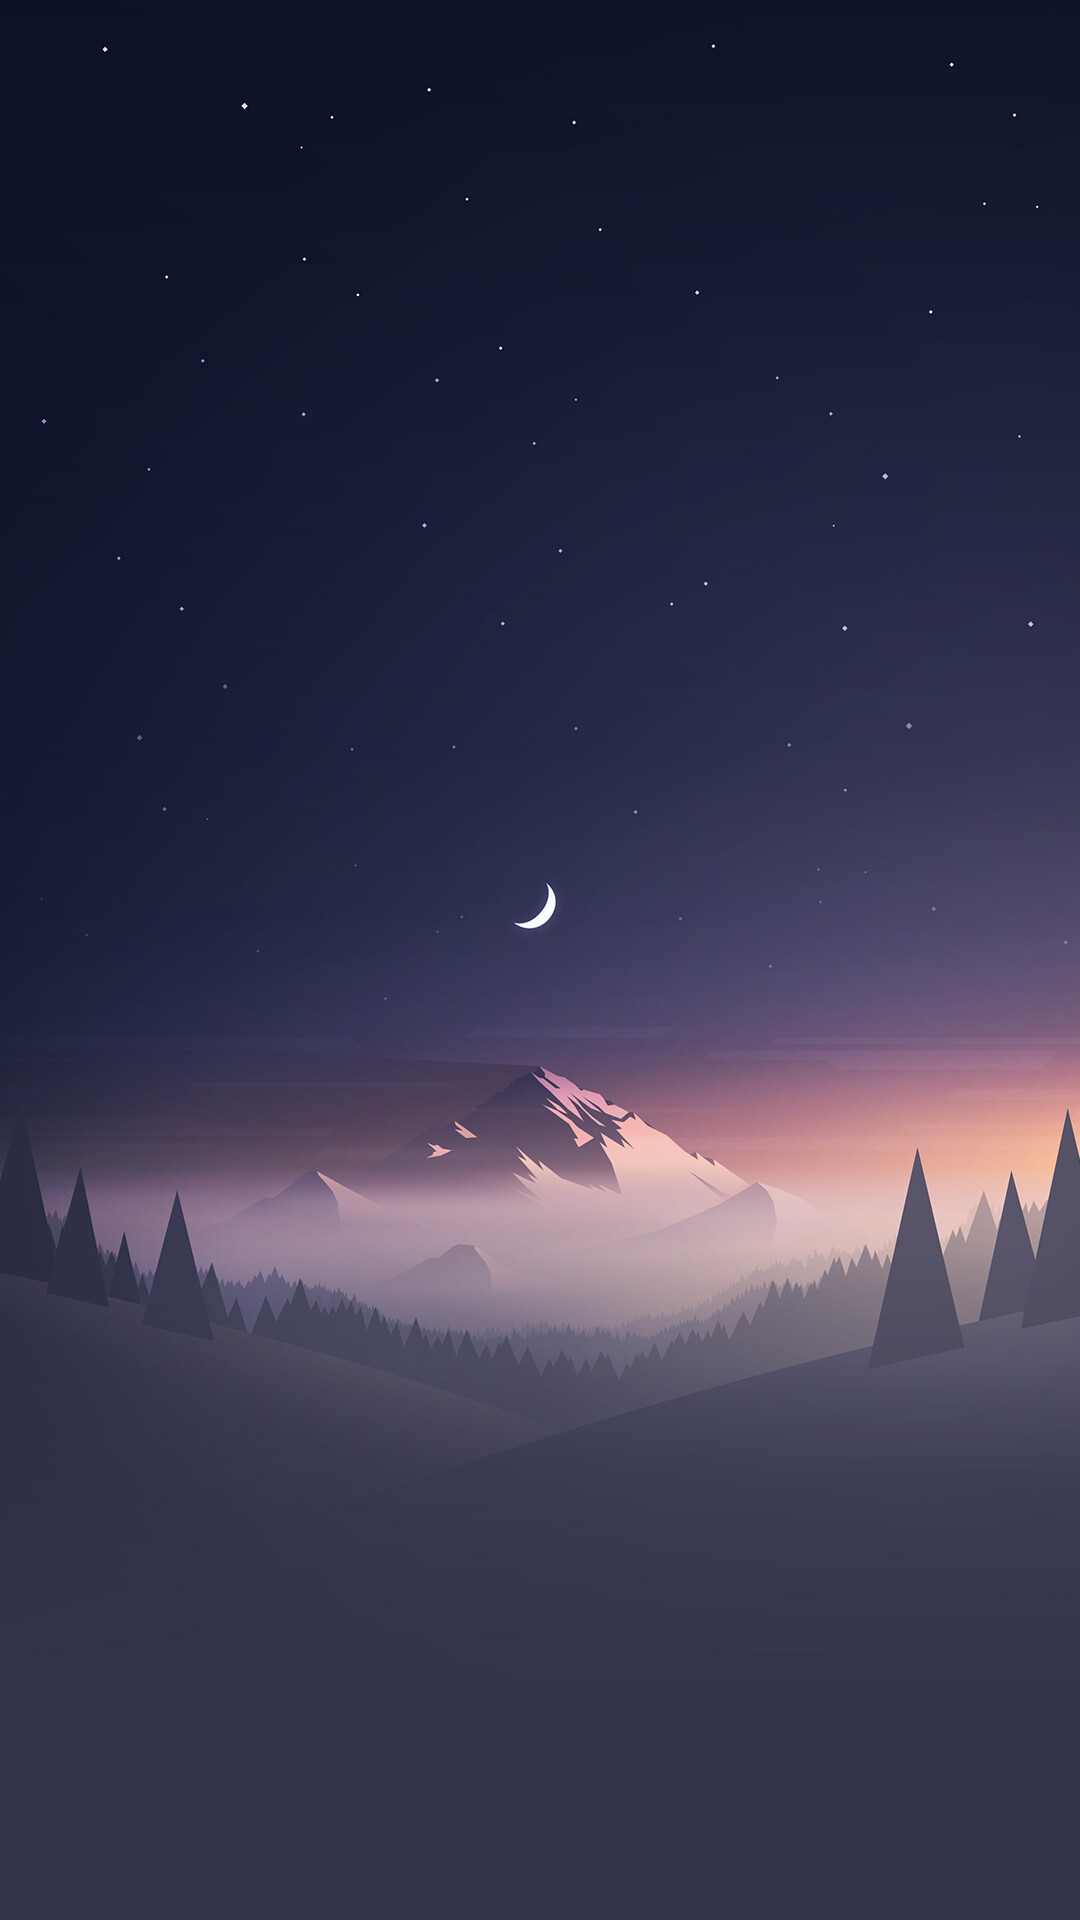 Moonlight: Celestial object, Crescent, Natural landscape. 1080x1920 Full HD Wallpaper.